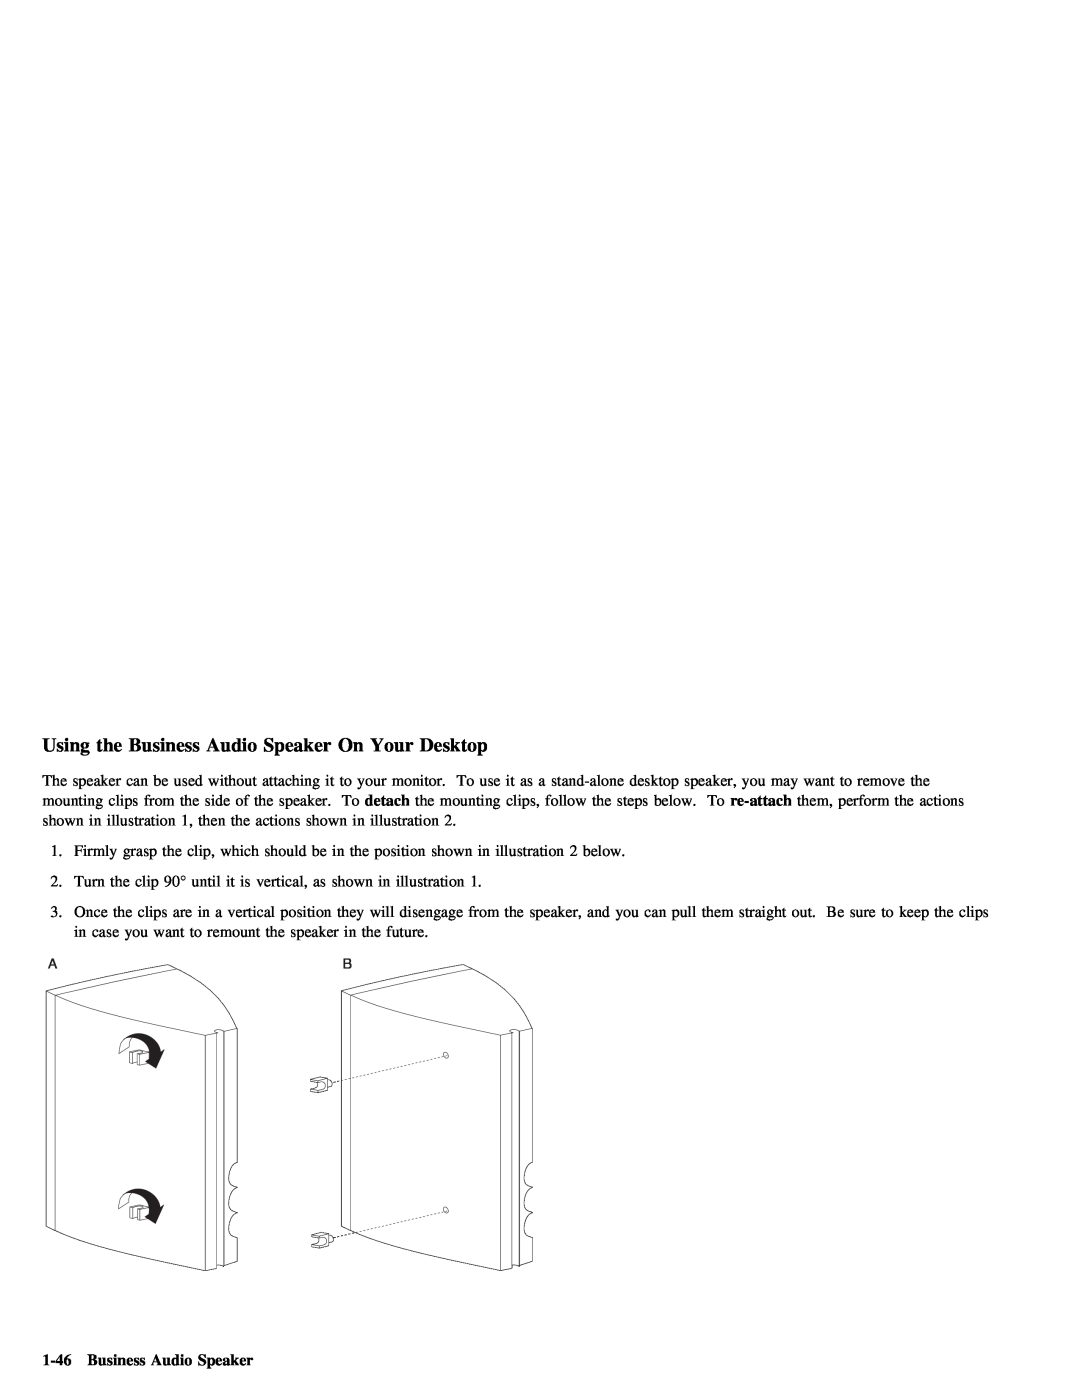 IBM 05L1596 manual 1-46Business Audio Speaker, Your, Using 